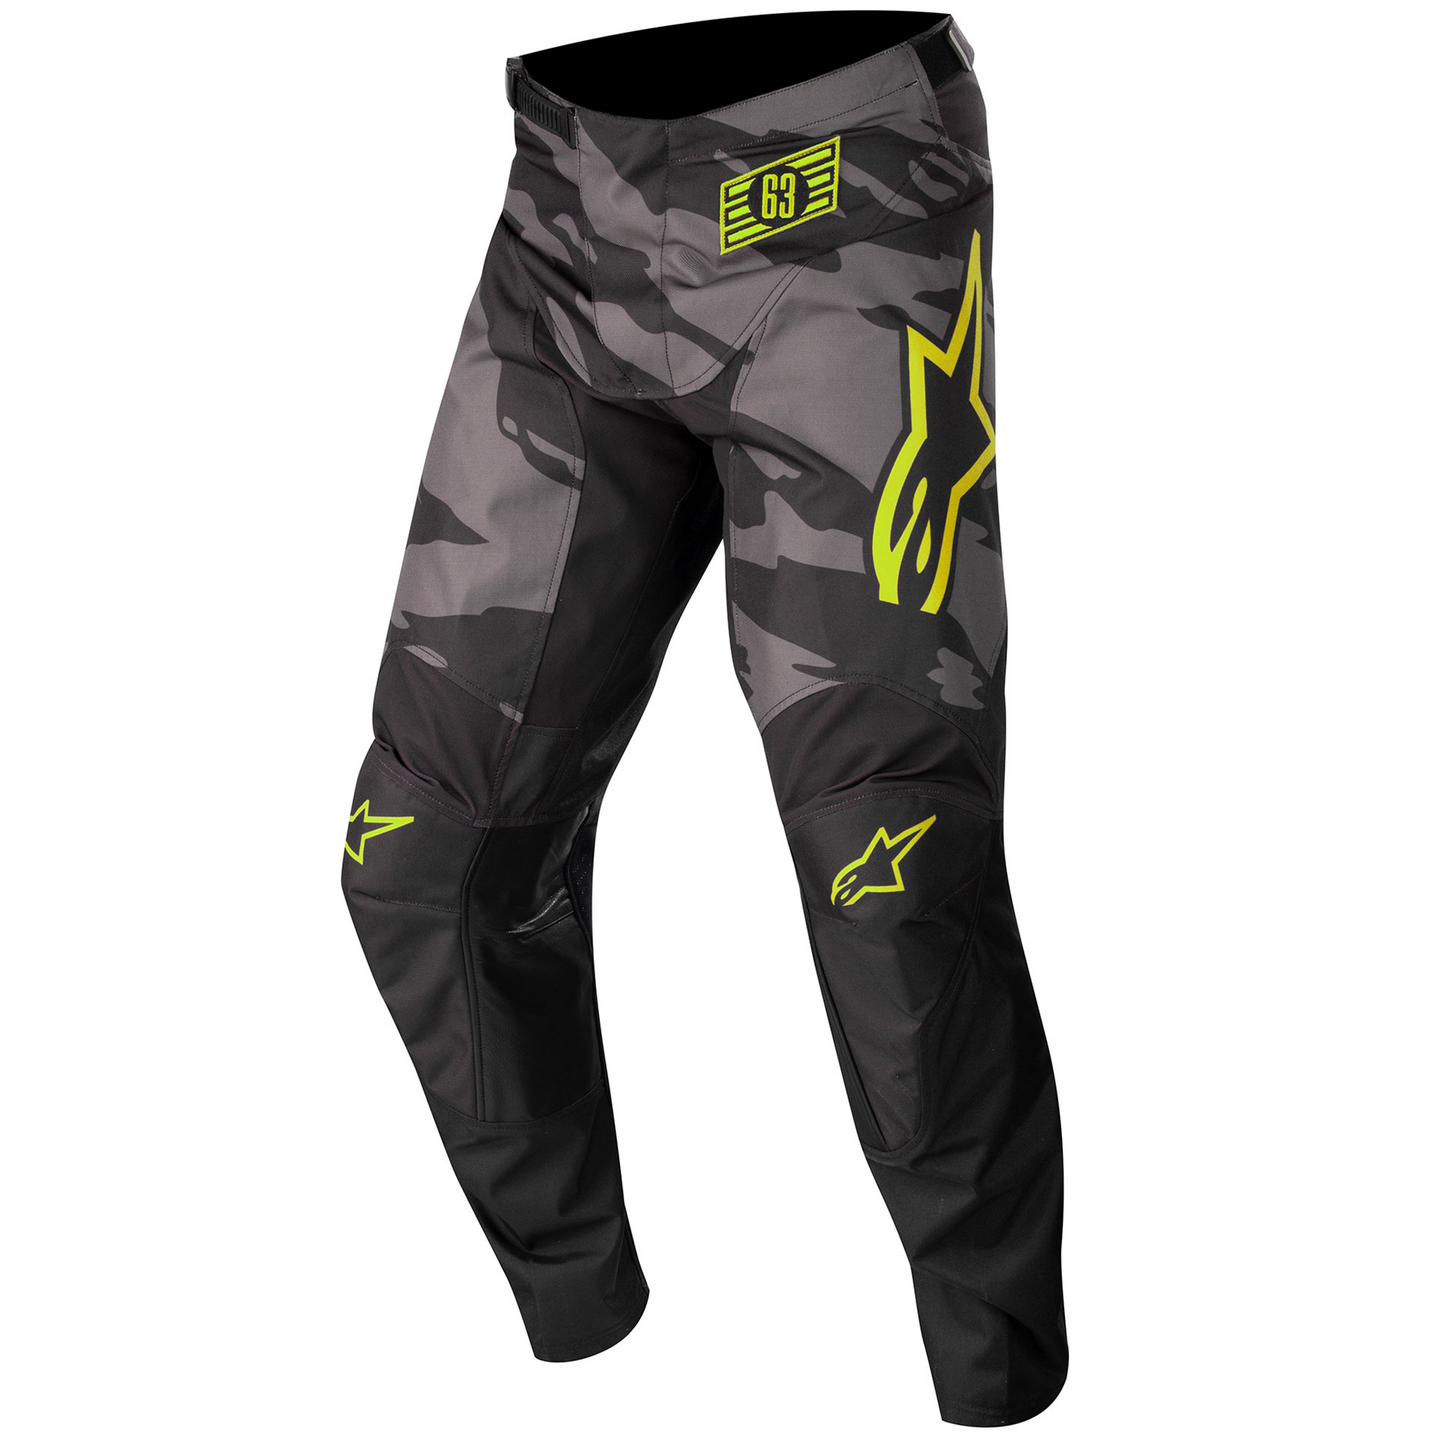 Alpinestars Racer Tactical Motorcross Pants - Black/Grey Camo/Yellow Flo (1154)